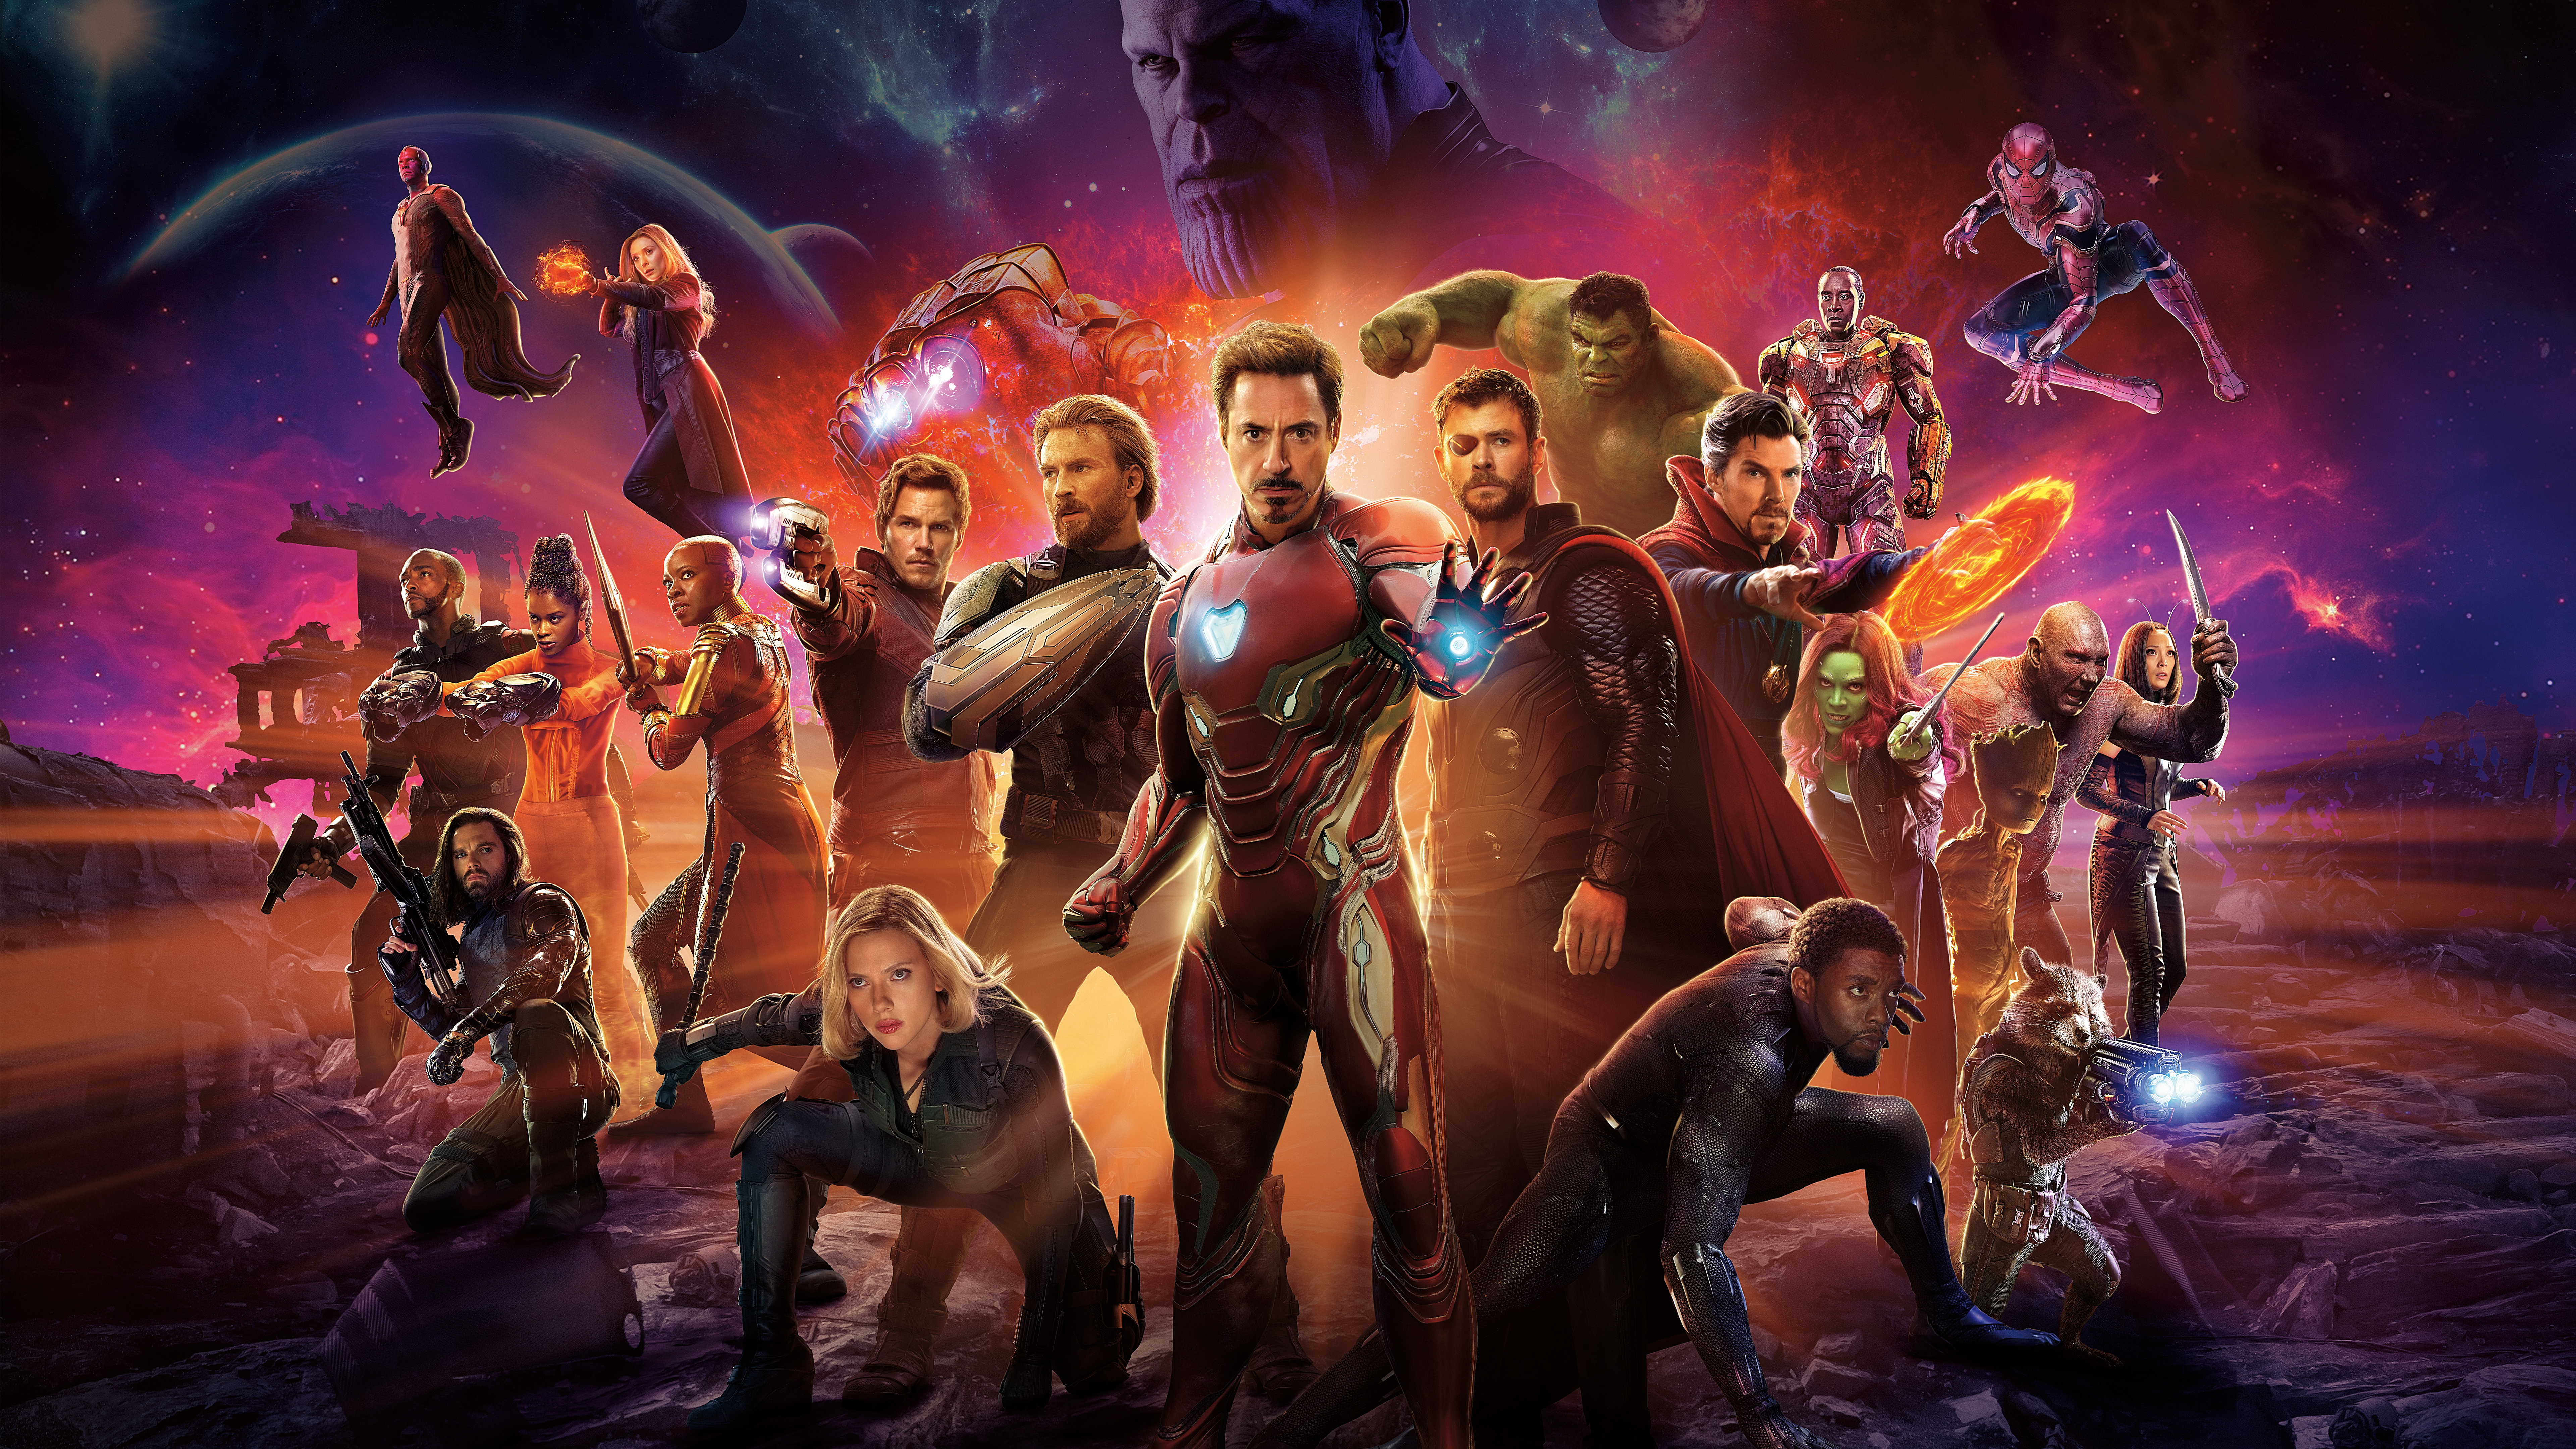 Avengers Infinity War Superheroes Cast 4K 8K4052516322 - Avengers Infinity War Superheroes Cast 4K 8K - War, Superheroes, Infinity, Cast, Avengers